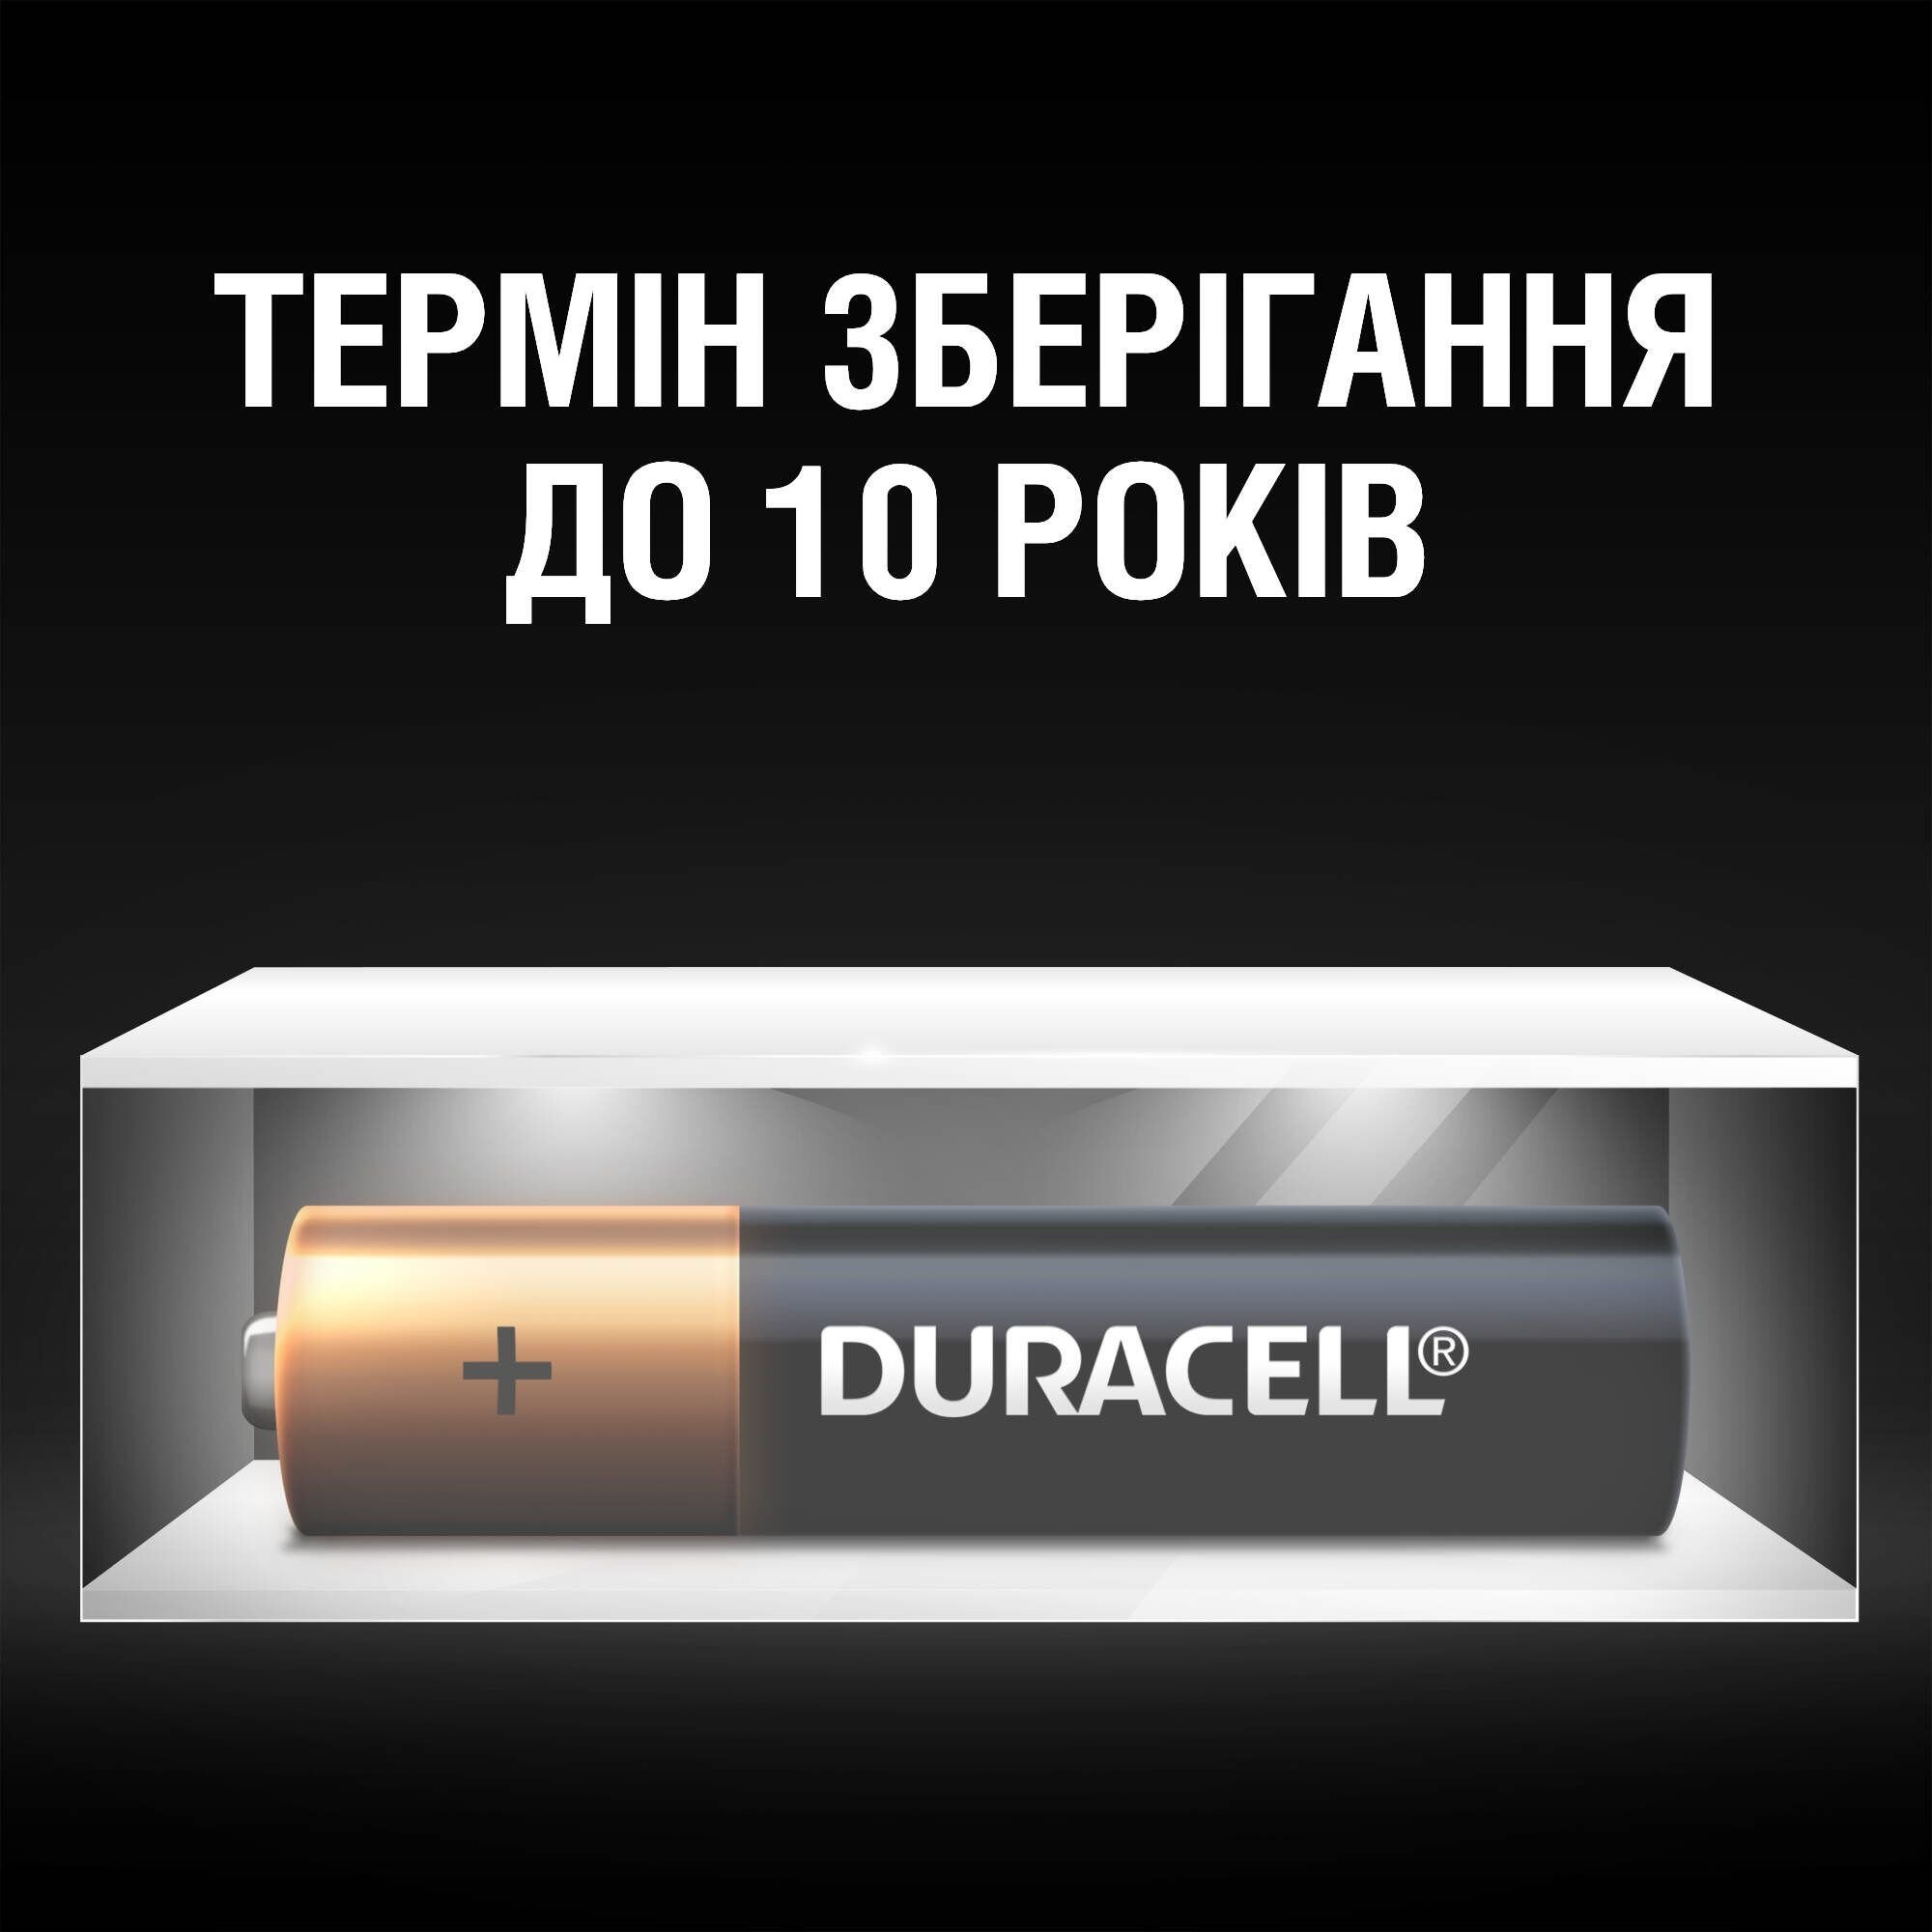 Щелочные батарейки мизинчиковые Duracell 1.5 V AAA LR03/MN2400, 5 шт. - фото 7